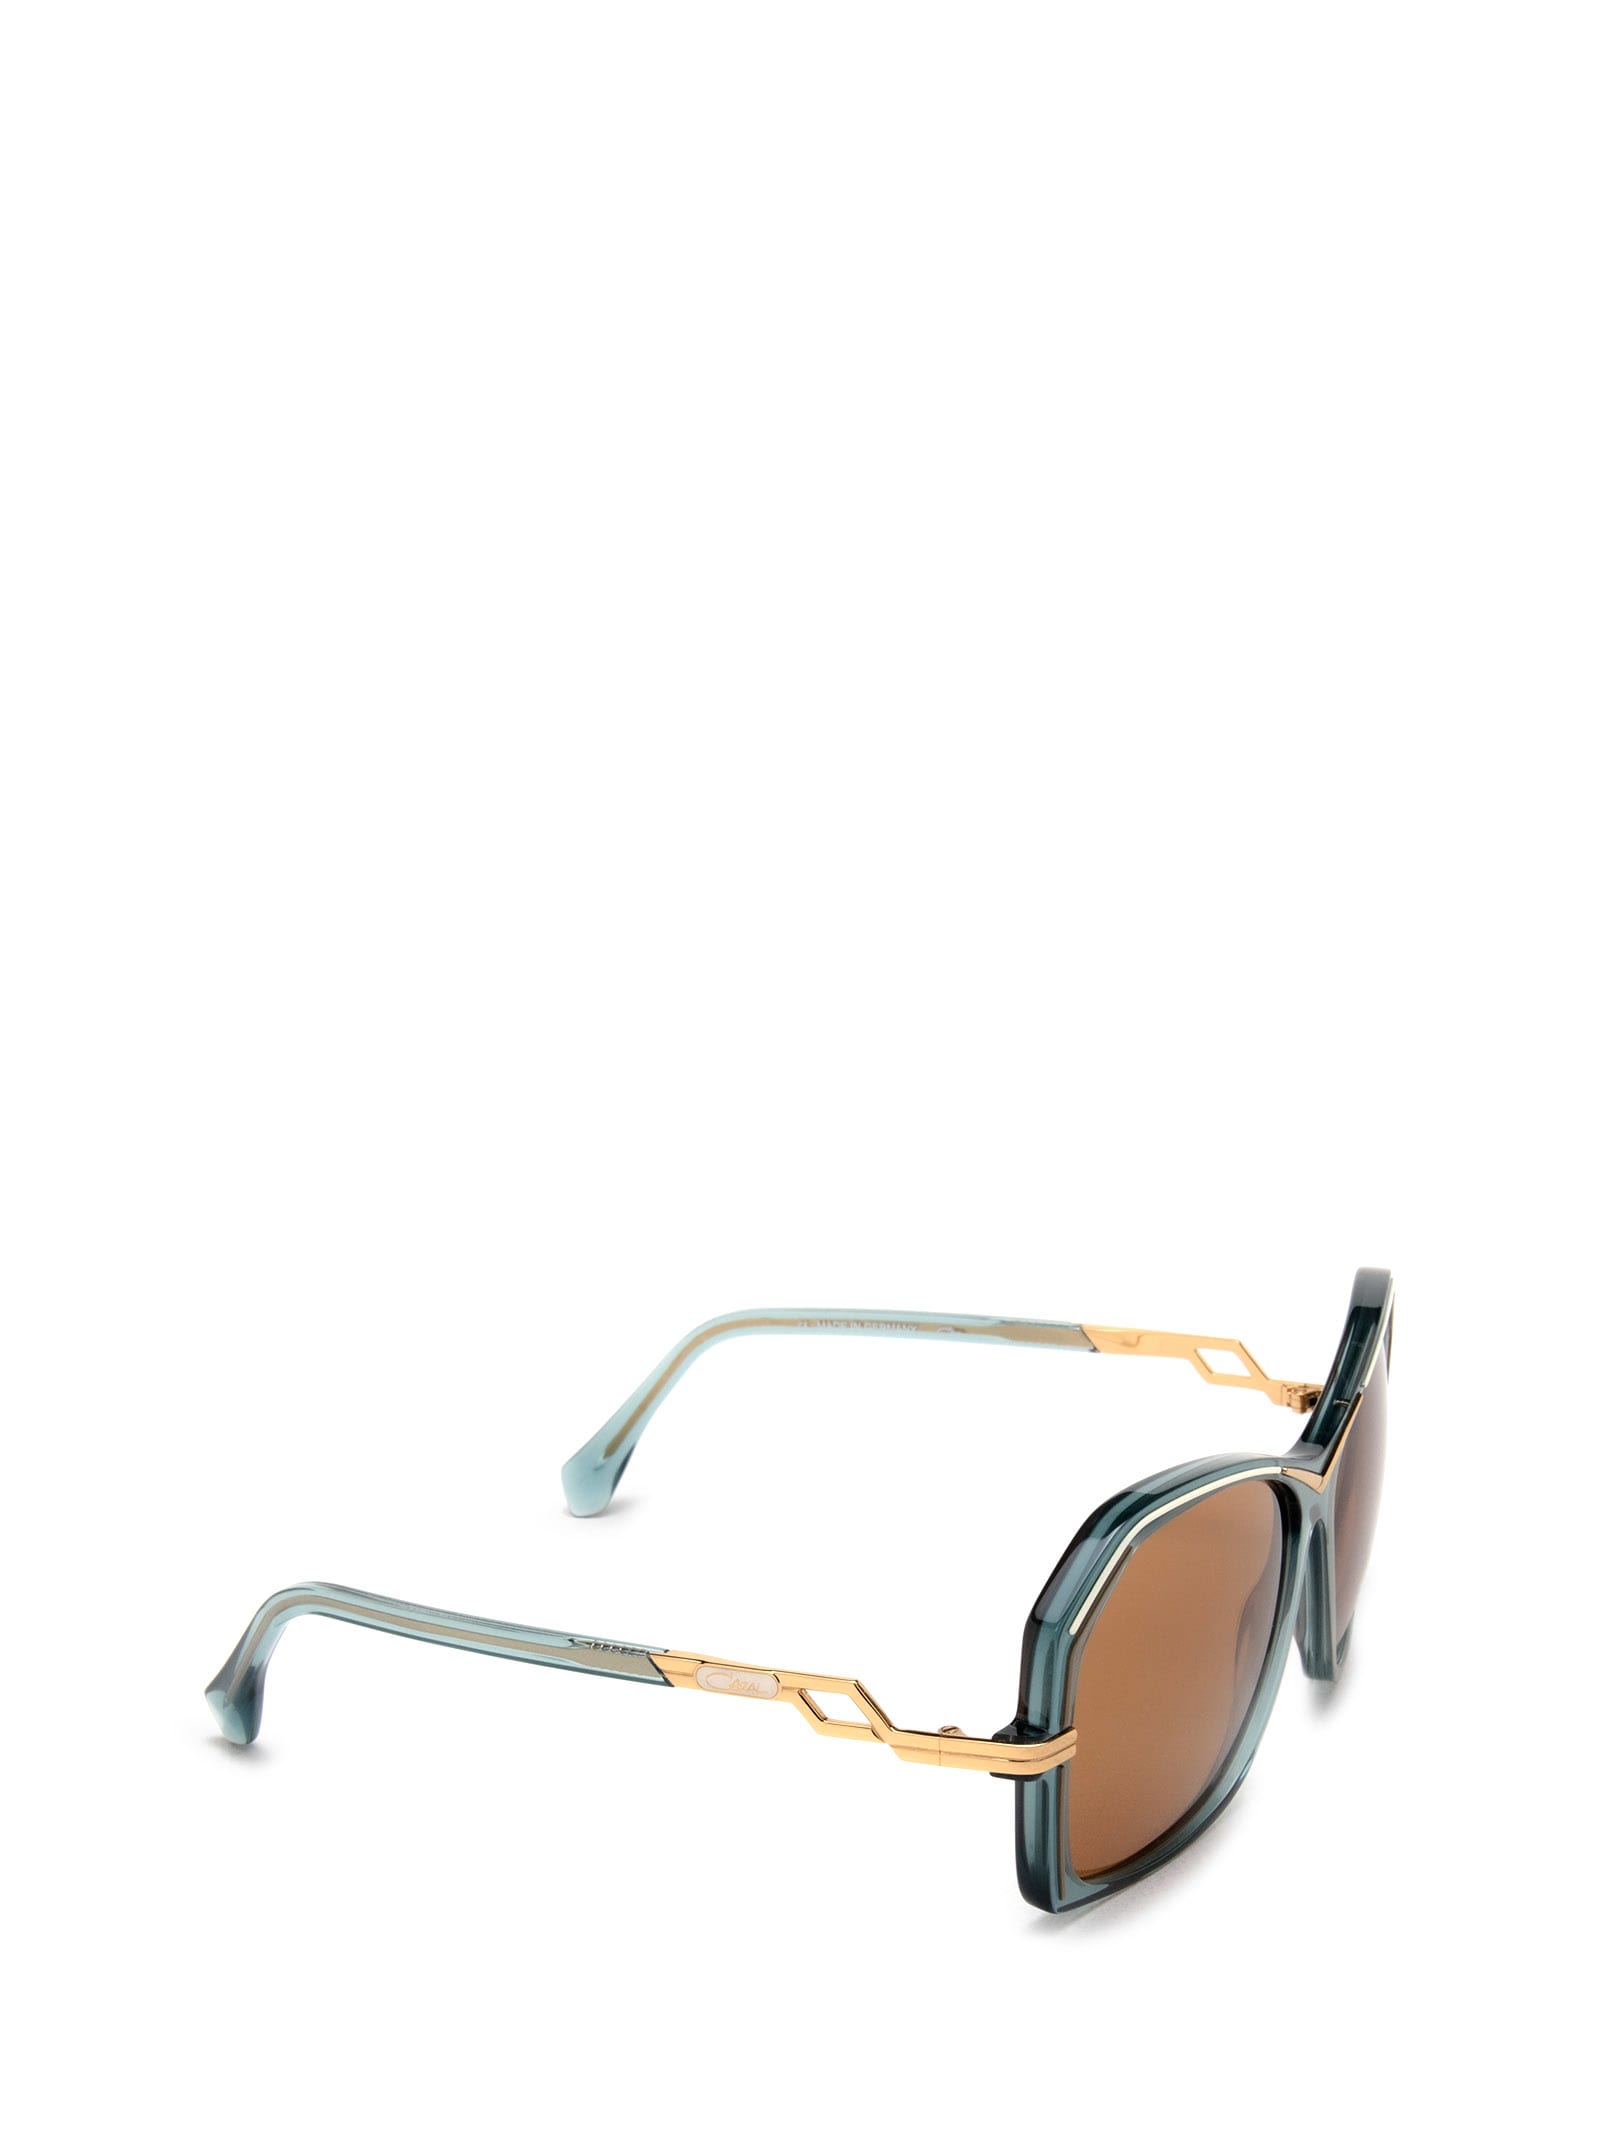 Shop Cazal 8510 Mint - Milky White Sunglasses